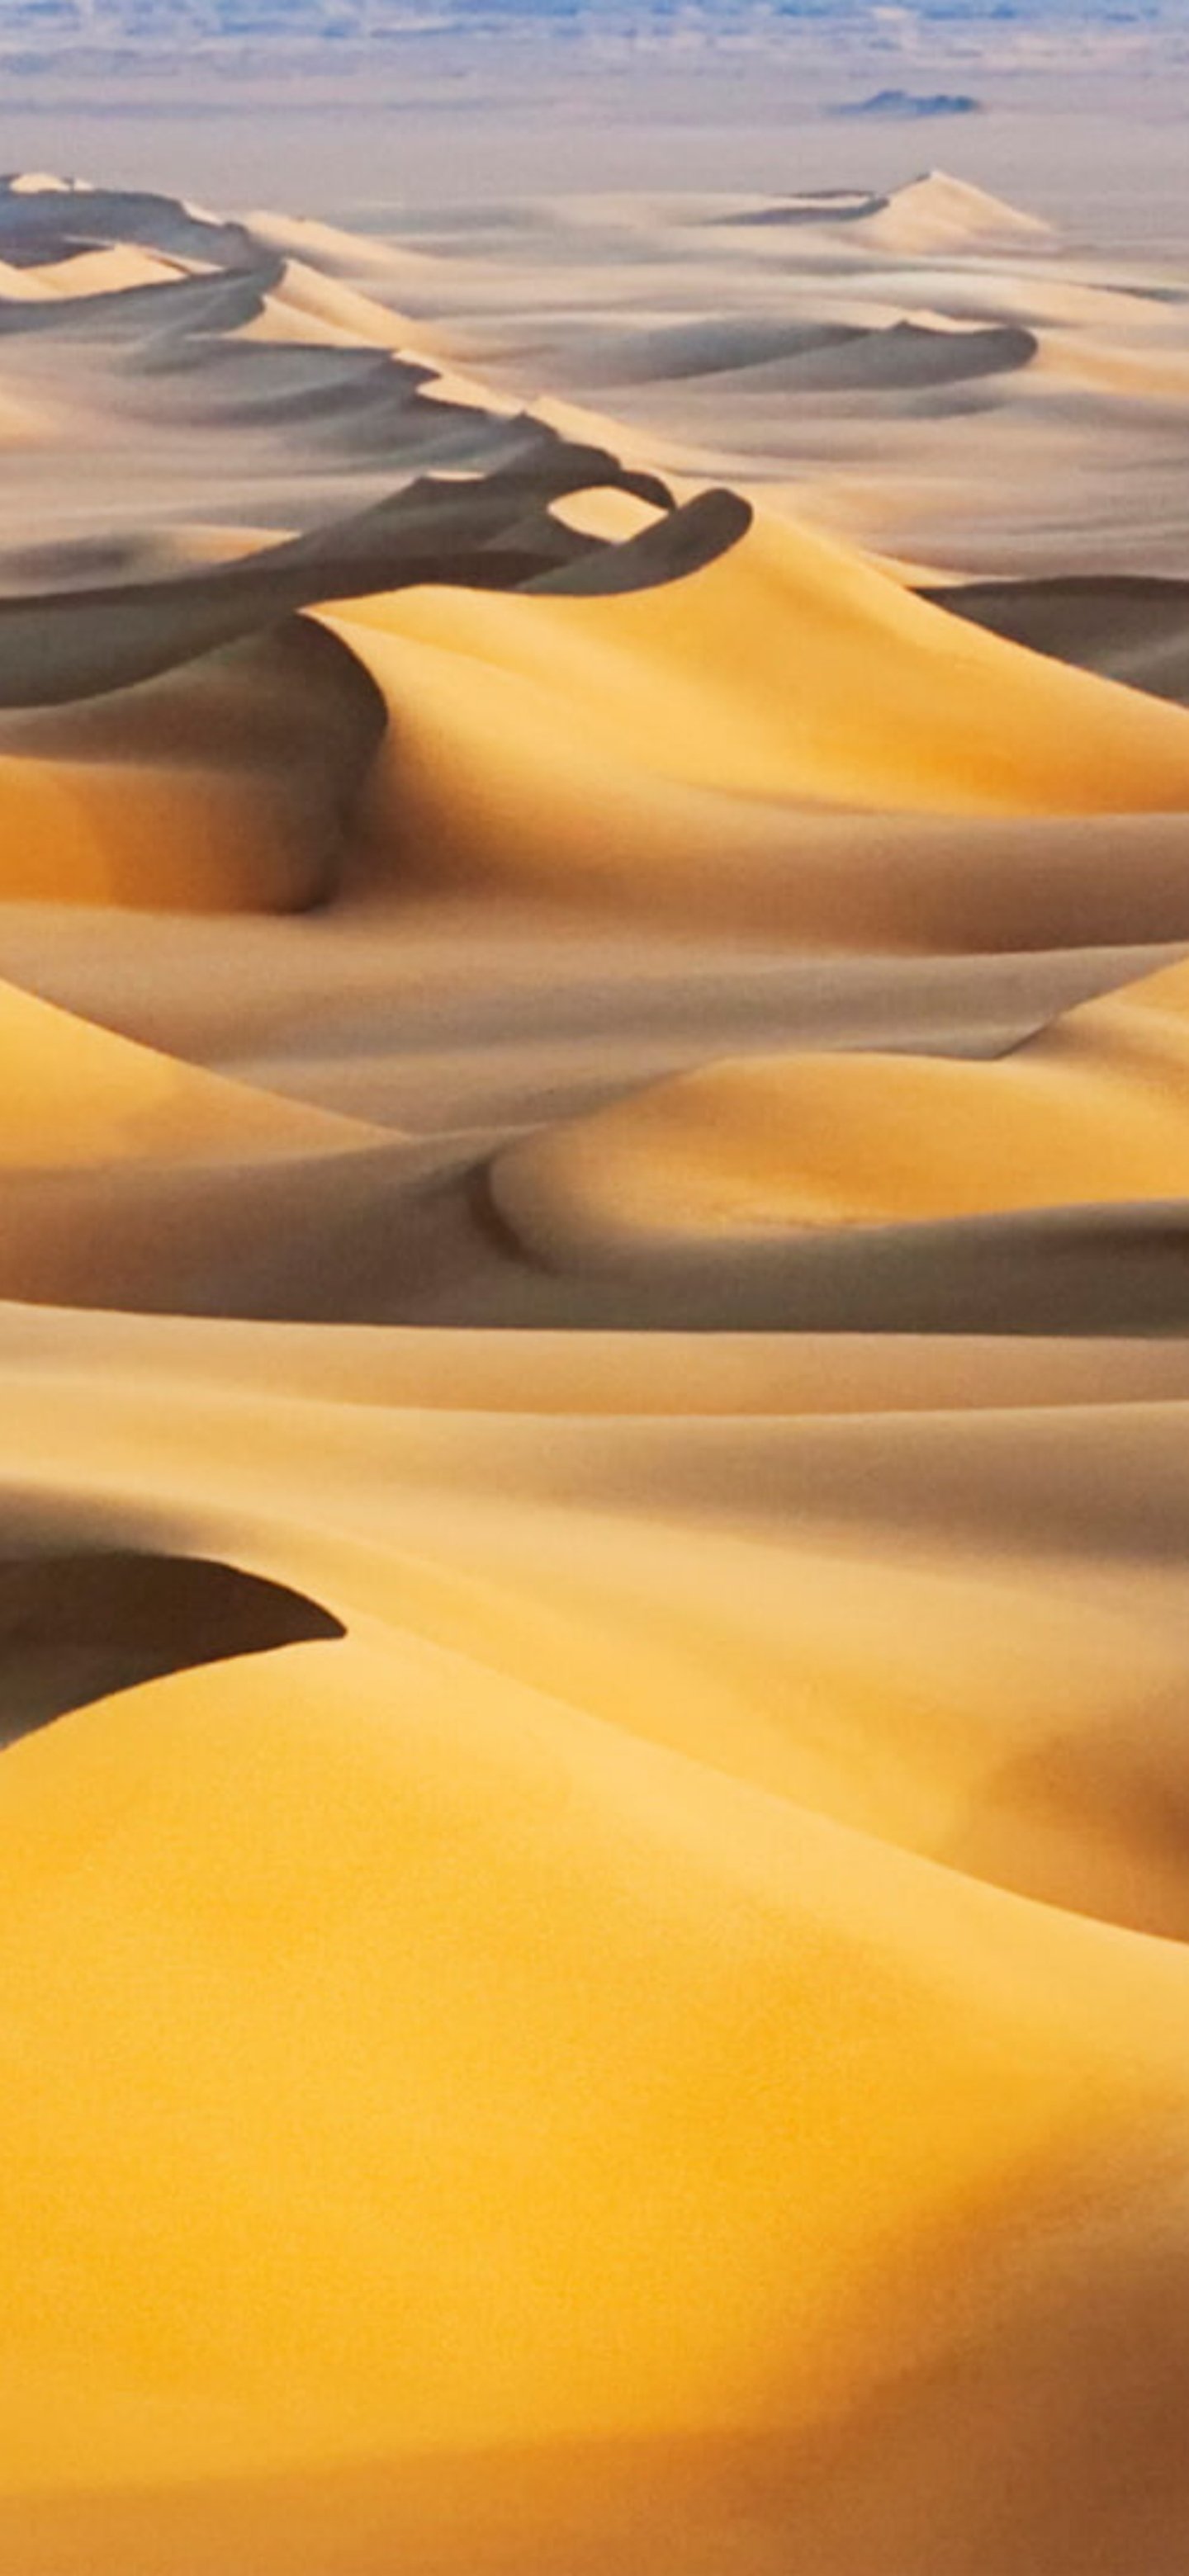 Fondos de pantalla de dunas dorado